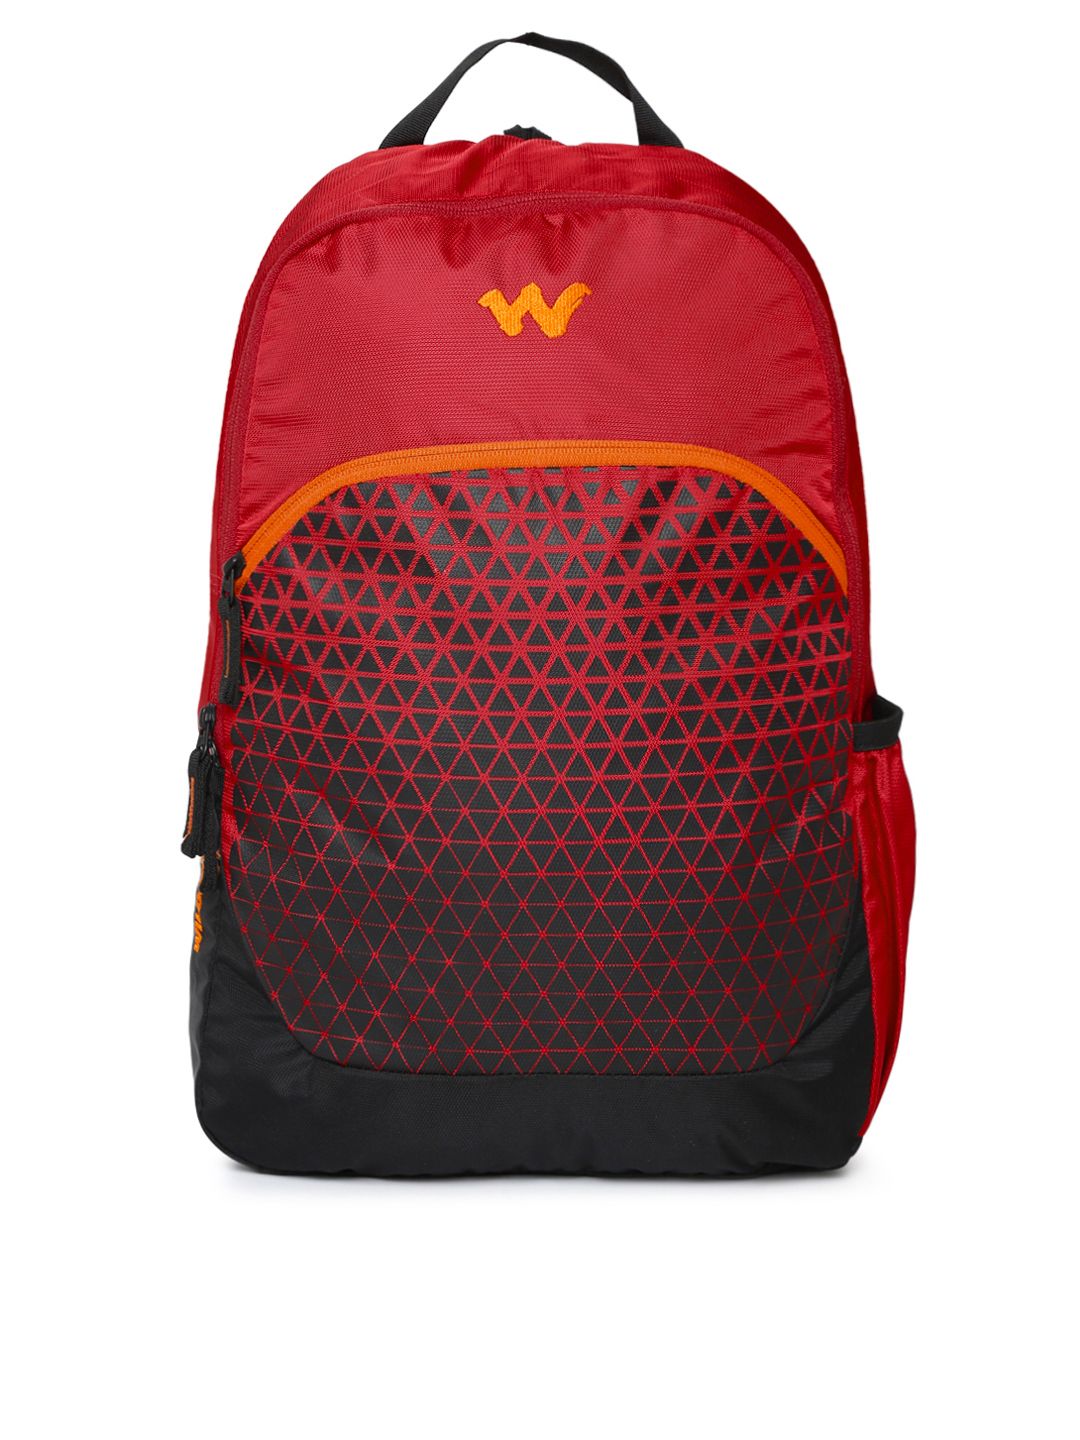 Wildcraft Unisex Red & Black Geometric Zeal Backpack Price in India